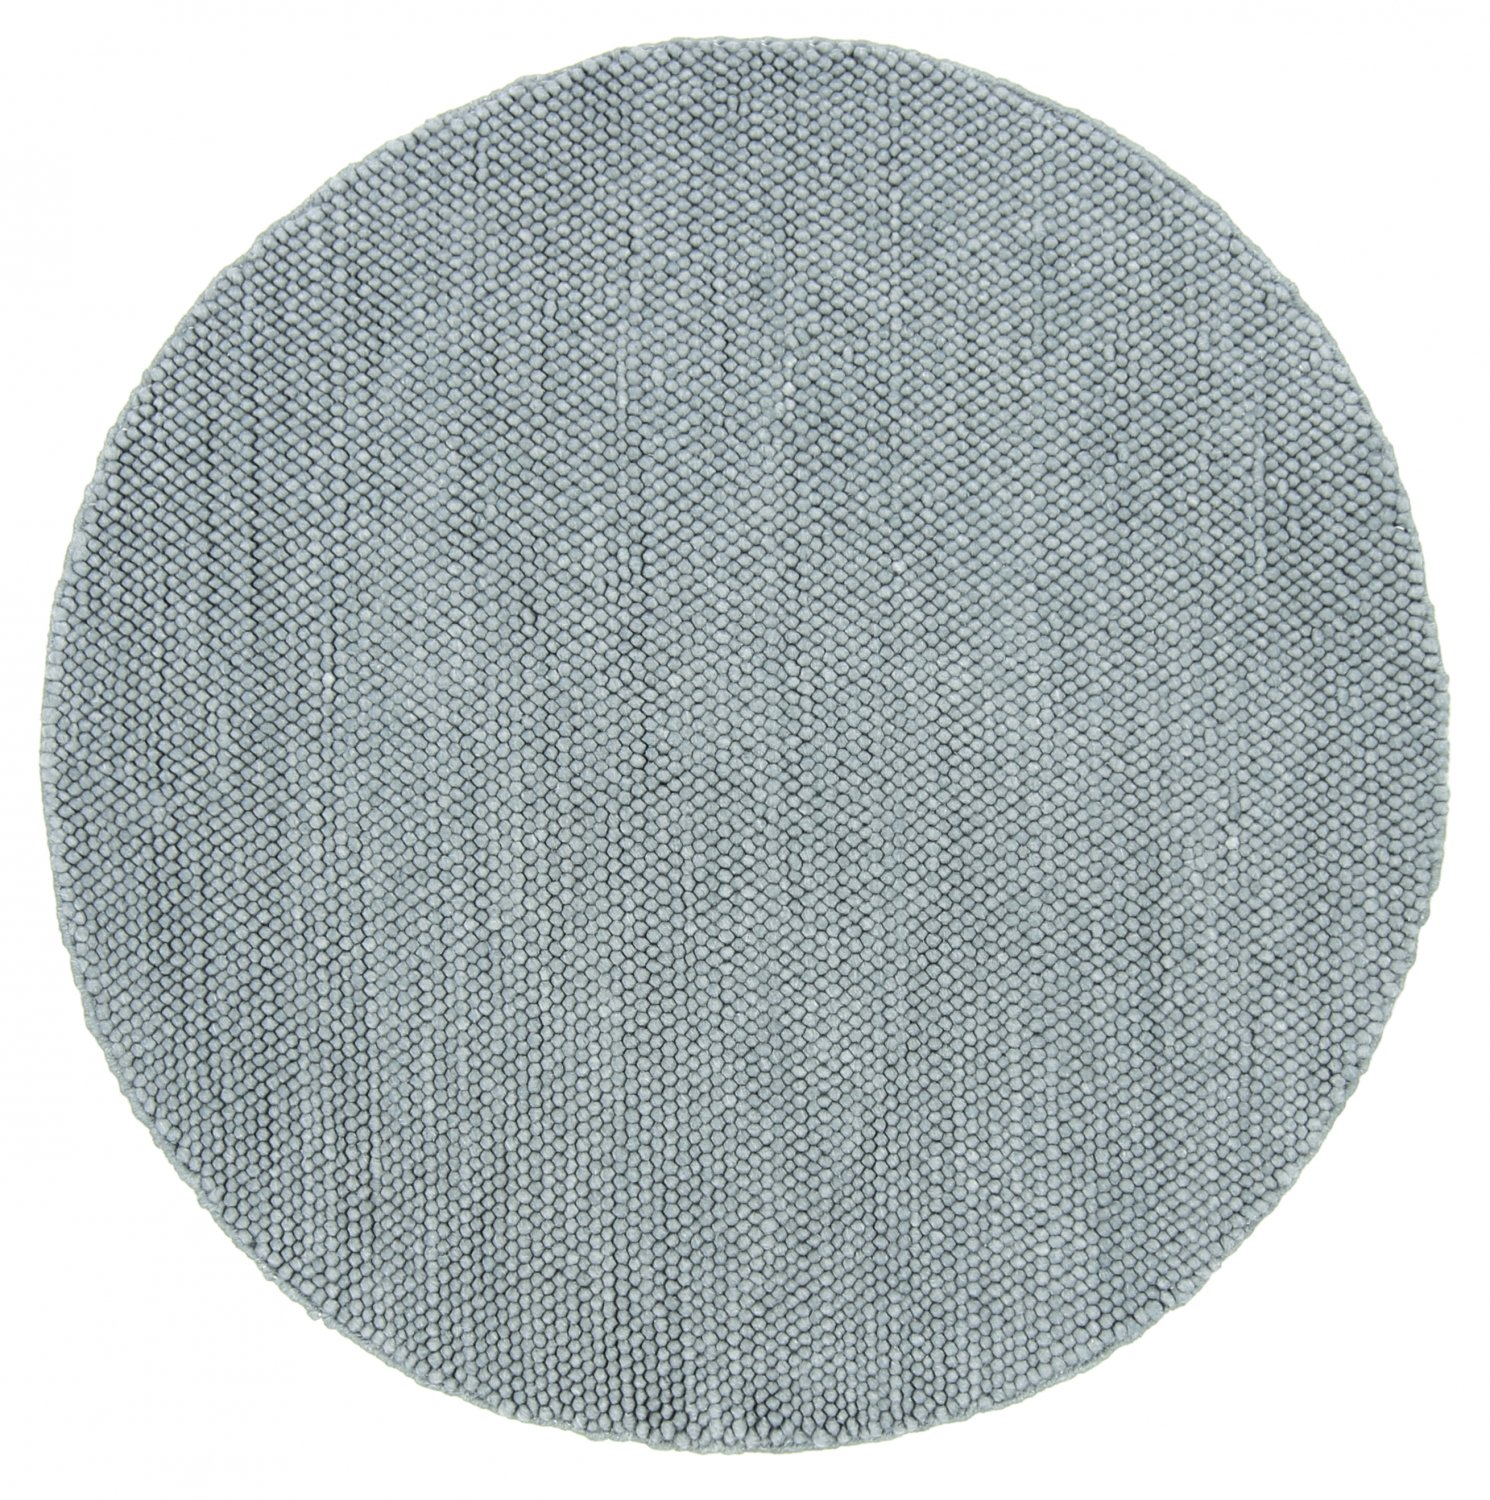 Runde tepper - Avafors (grå)